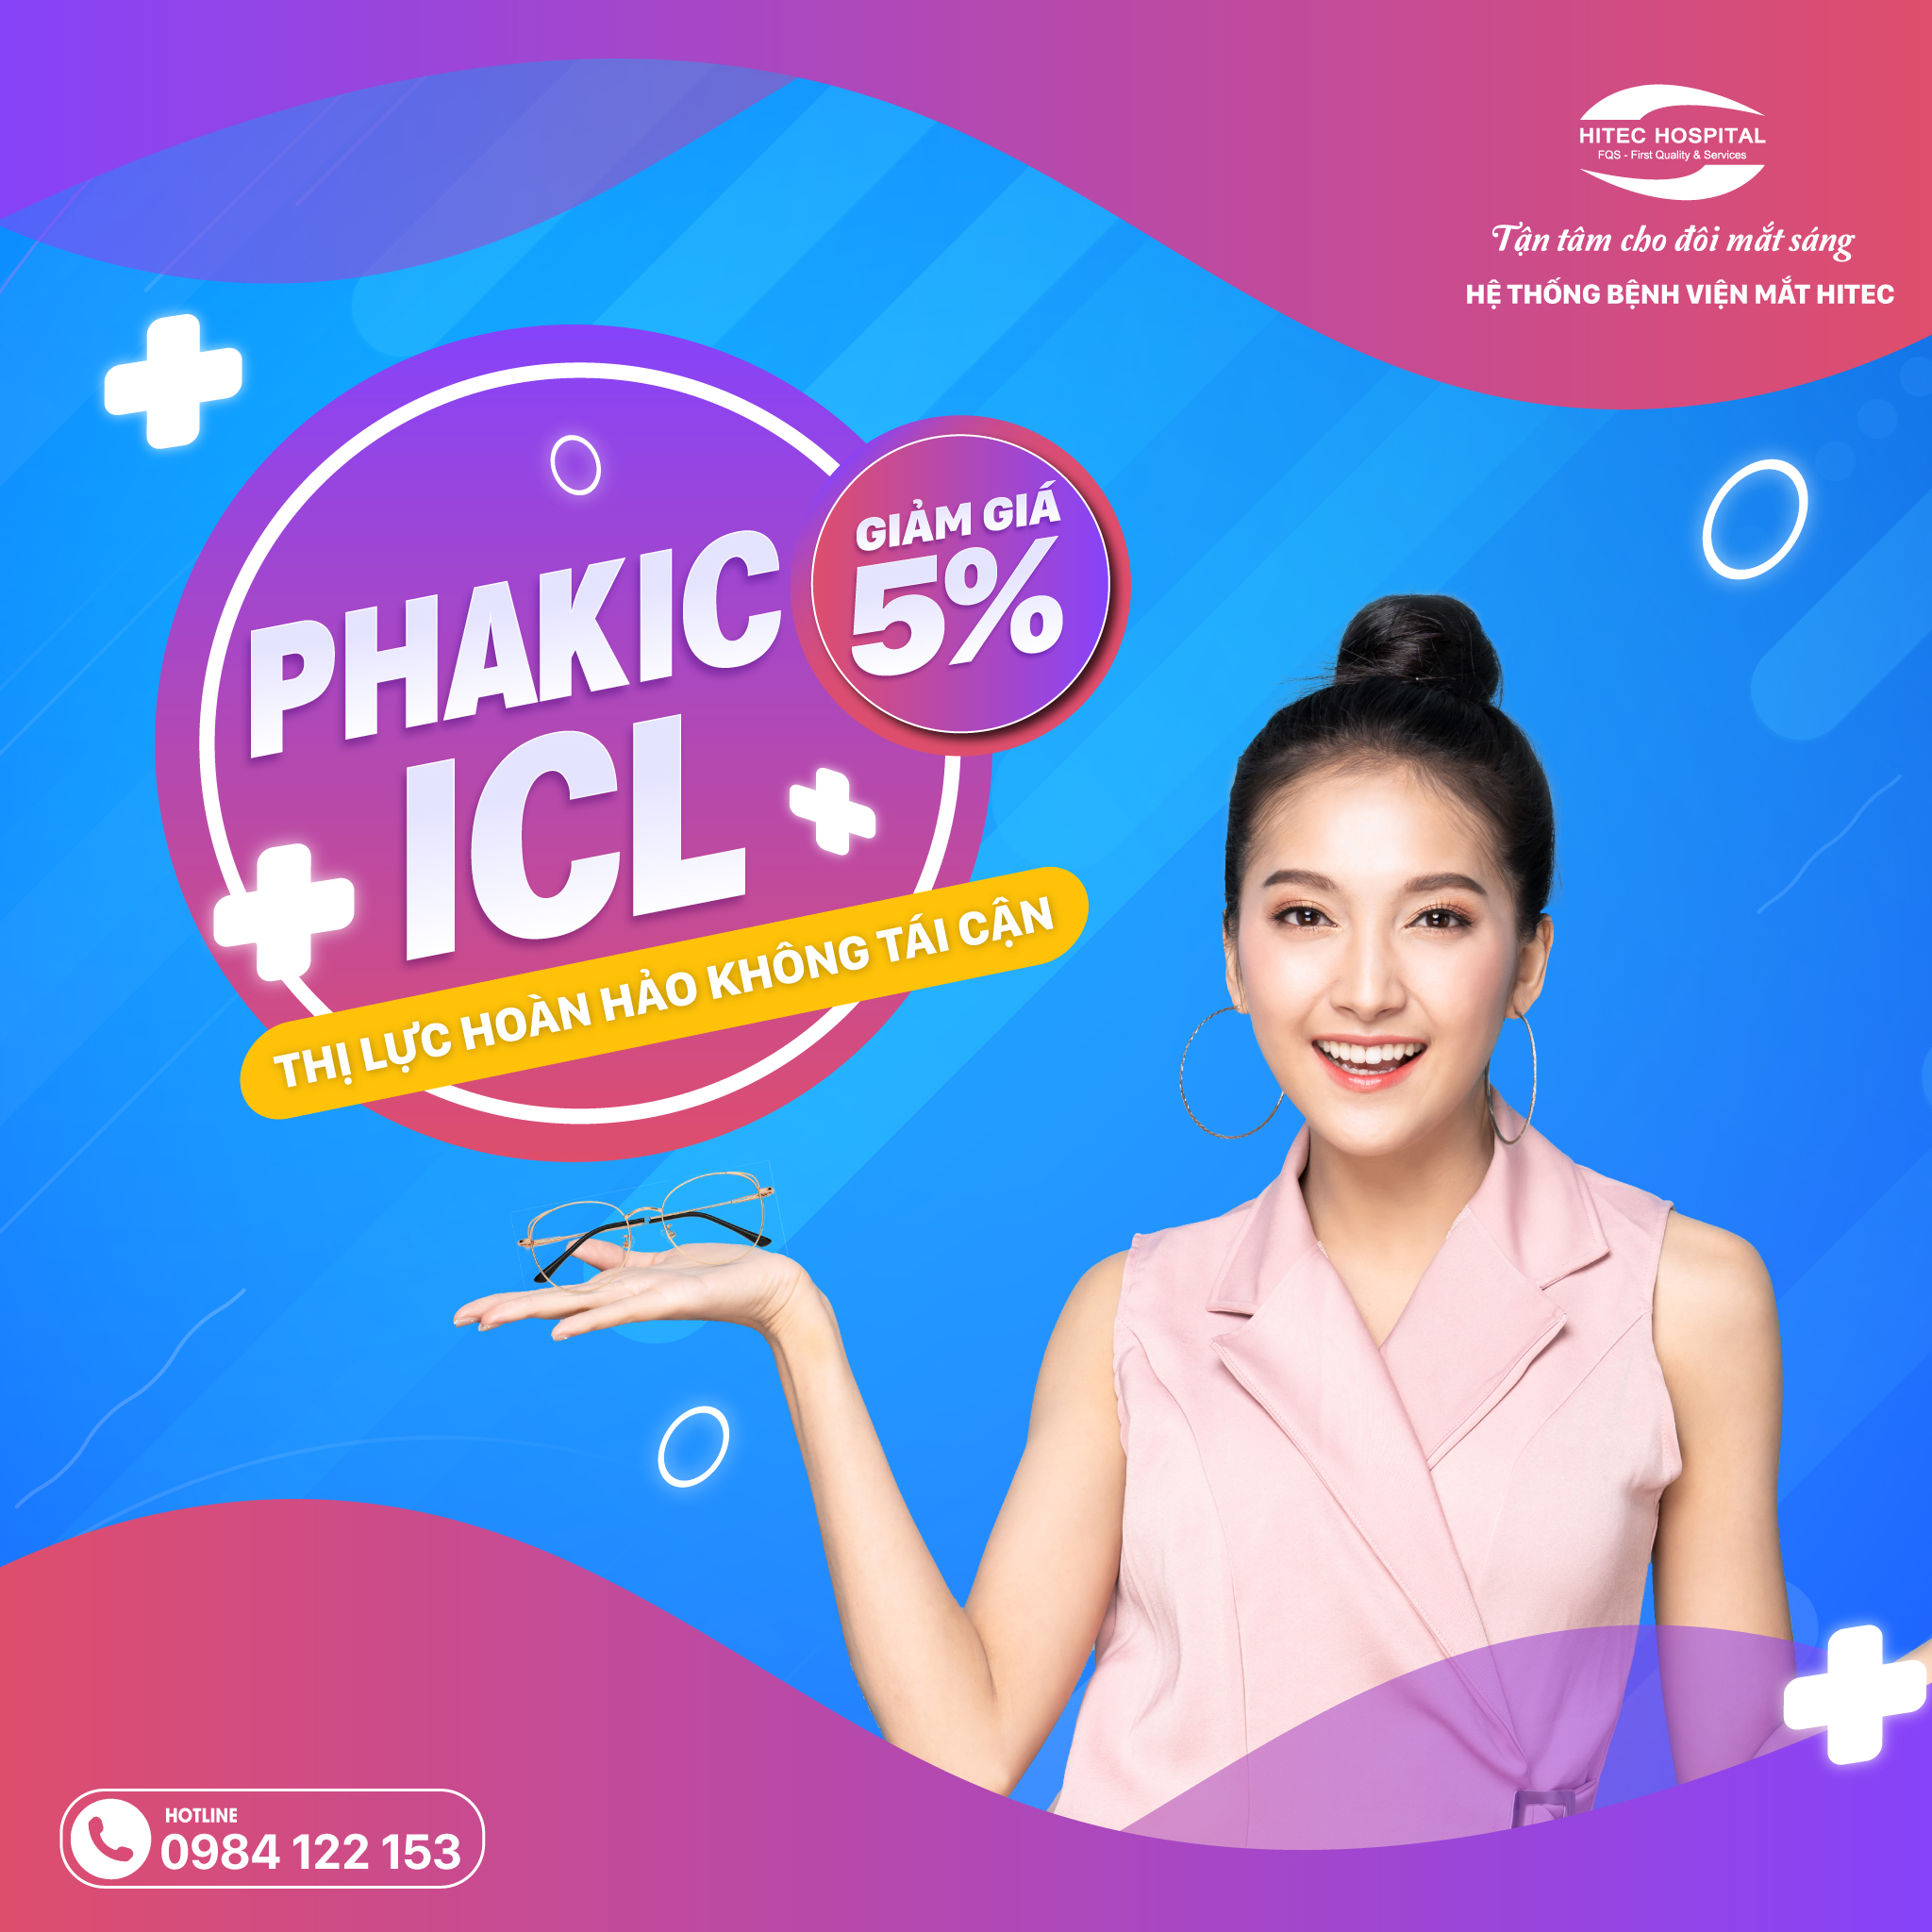 Phakic ICL T7